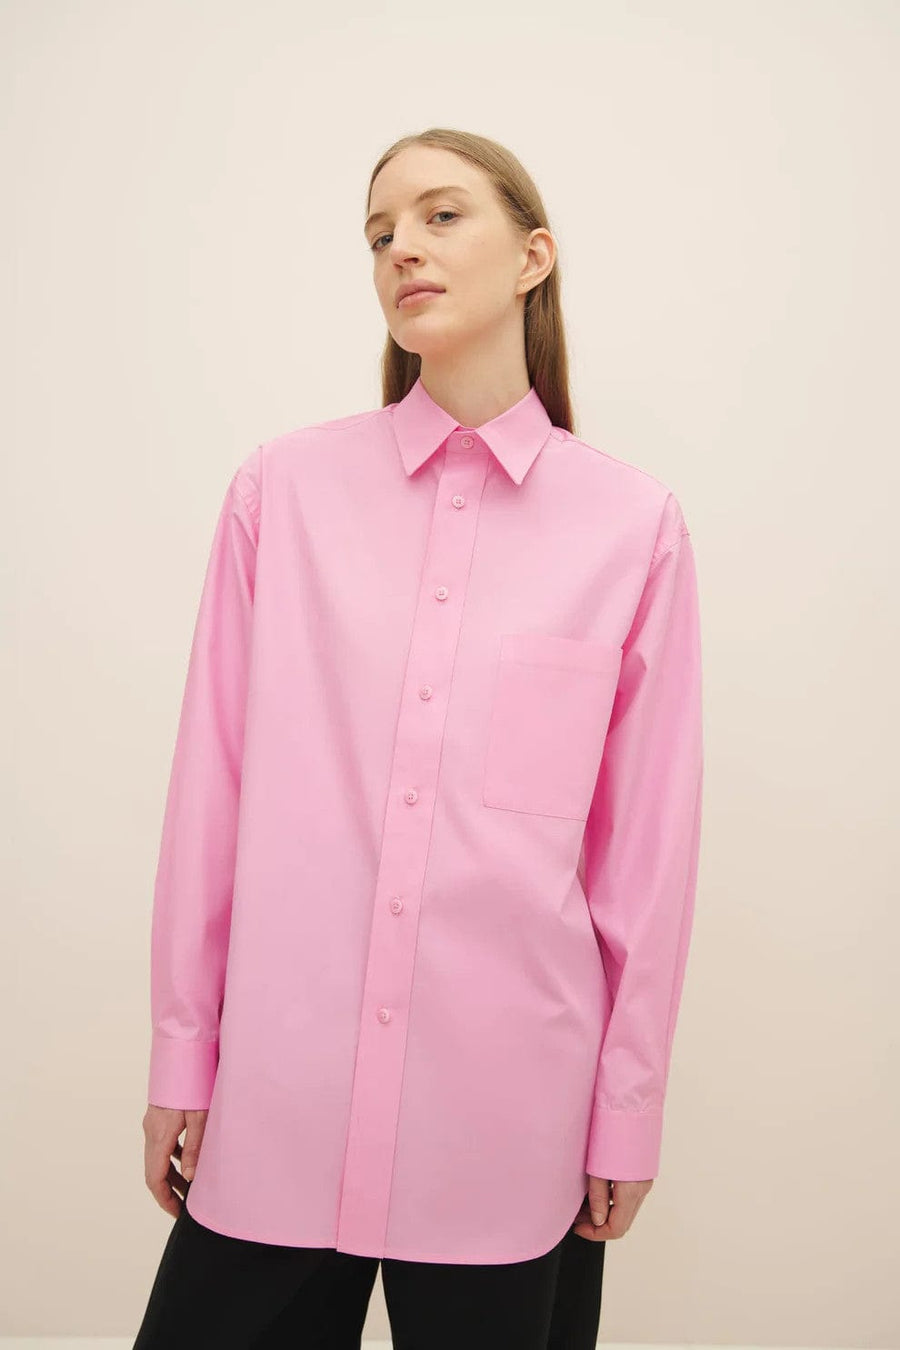 James Shirt Candy Pink